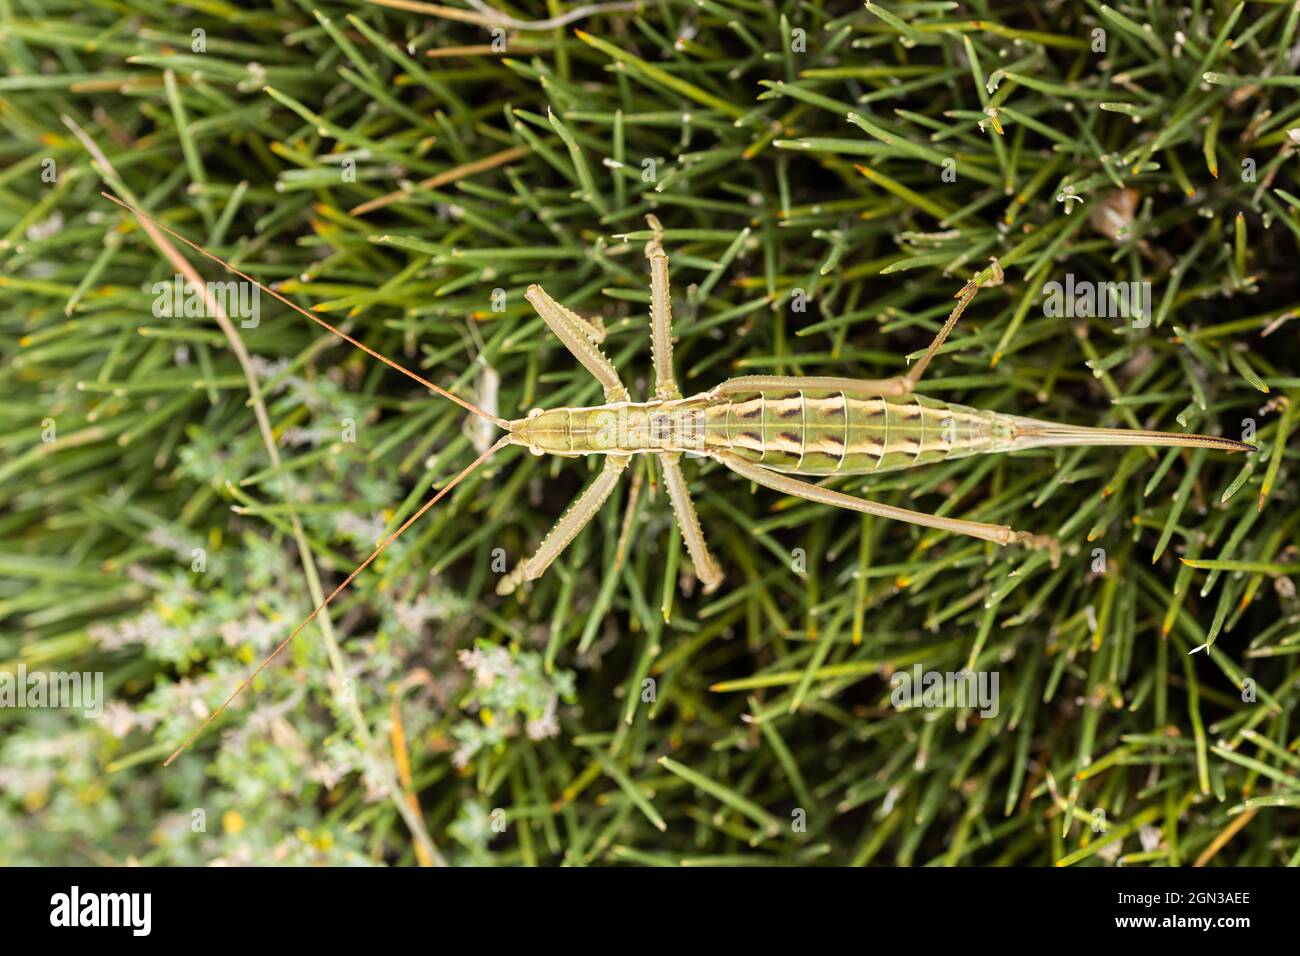 Close up of Common Predatory Bush-cricket (Saga pedo) Stock Photo